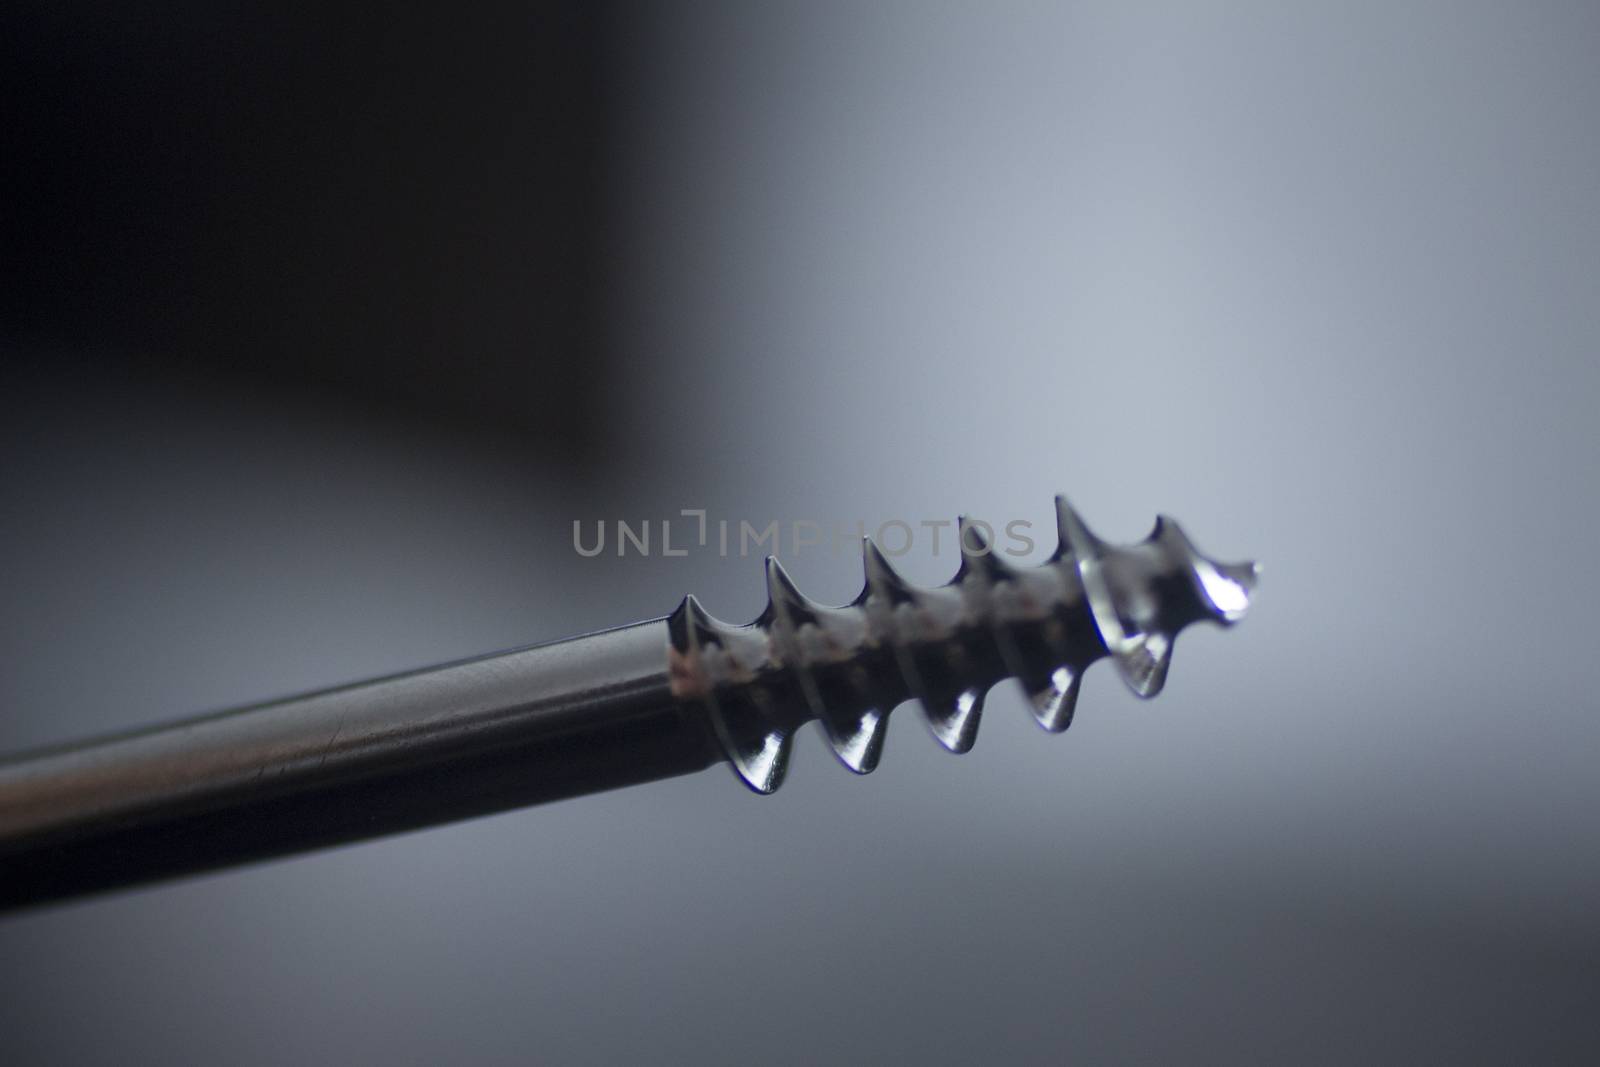 Traumatology orthopedic surgery implant titanium silver gray metal color screw in semi silhouette against plain black studio background. Close-up macro horizontal photograph. 